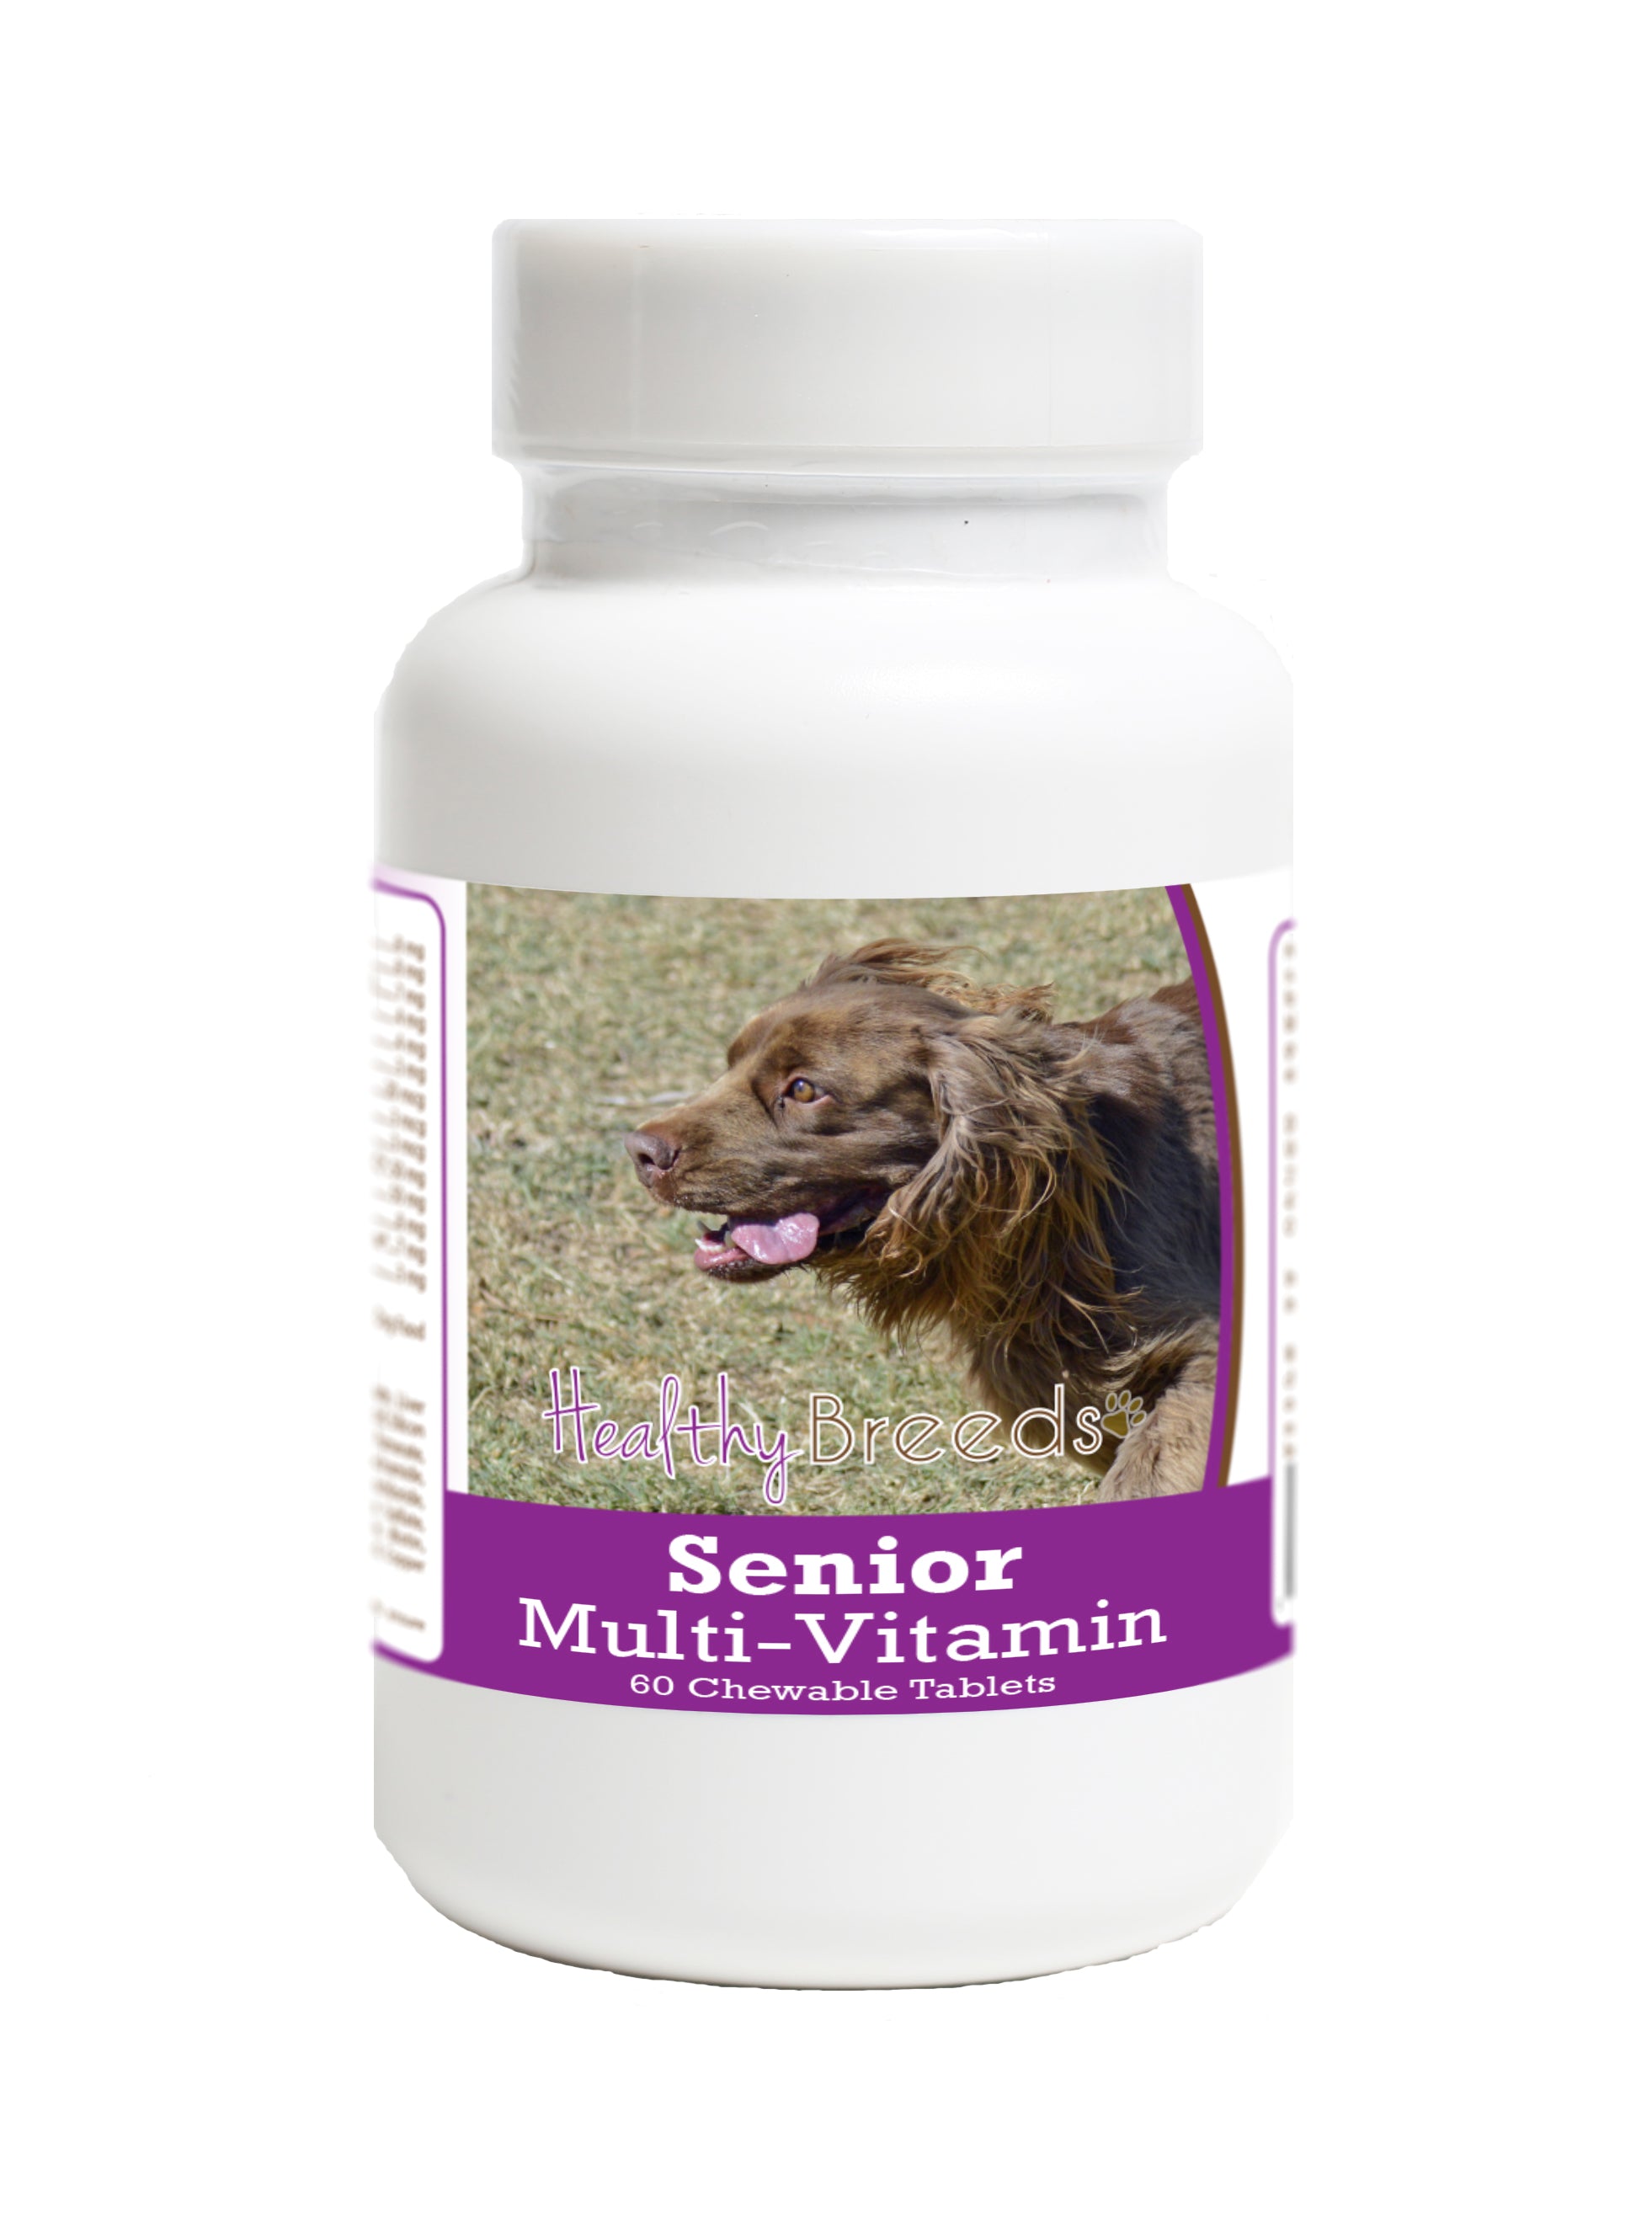 Sussex Spaniel Senior Dog Multivitamin Tablets 60 Count